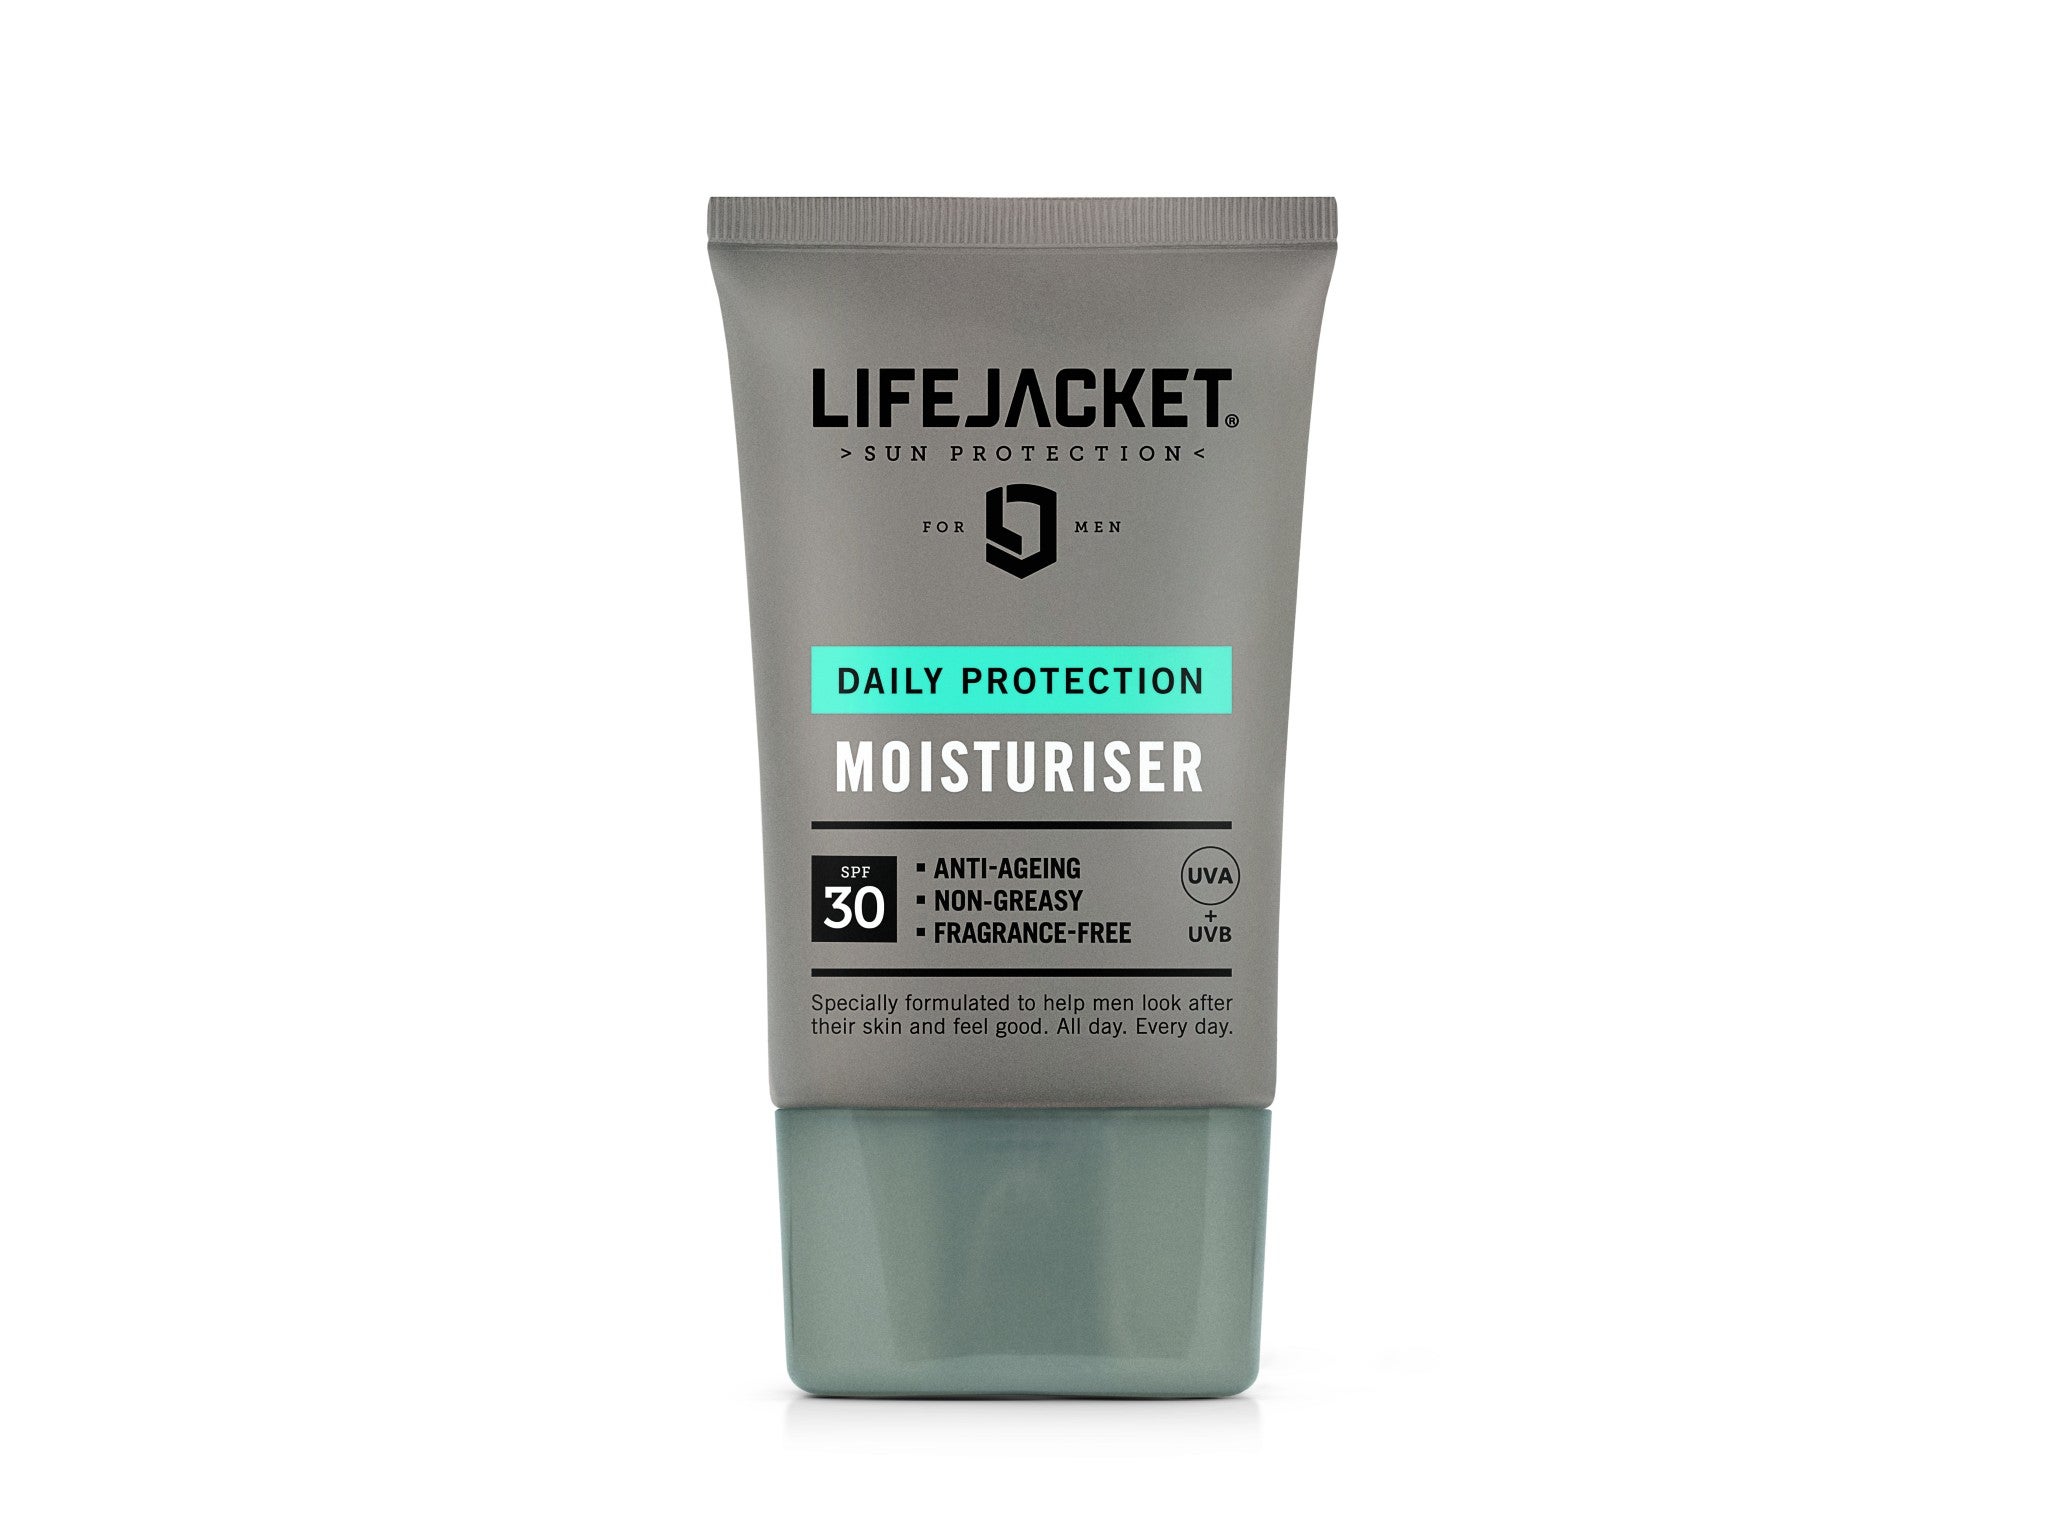 LifeJacket daily protection SPF30 moisturiser indybest